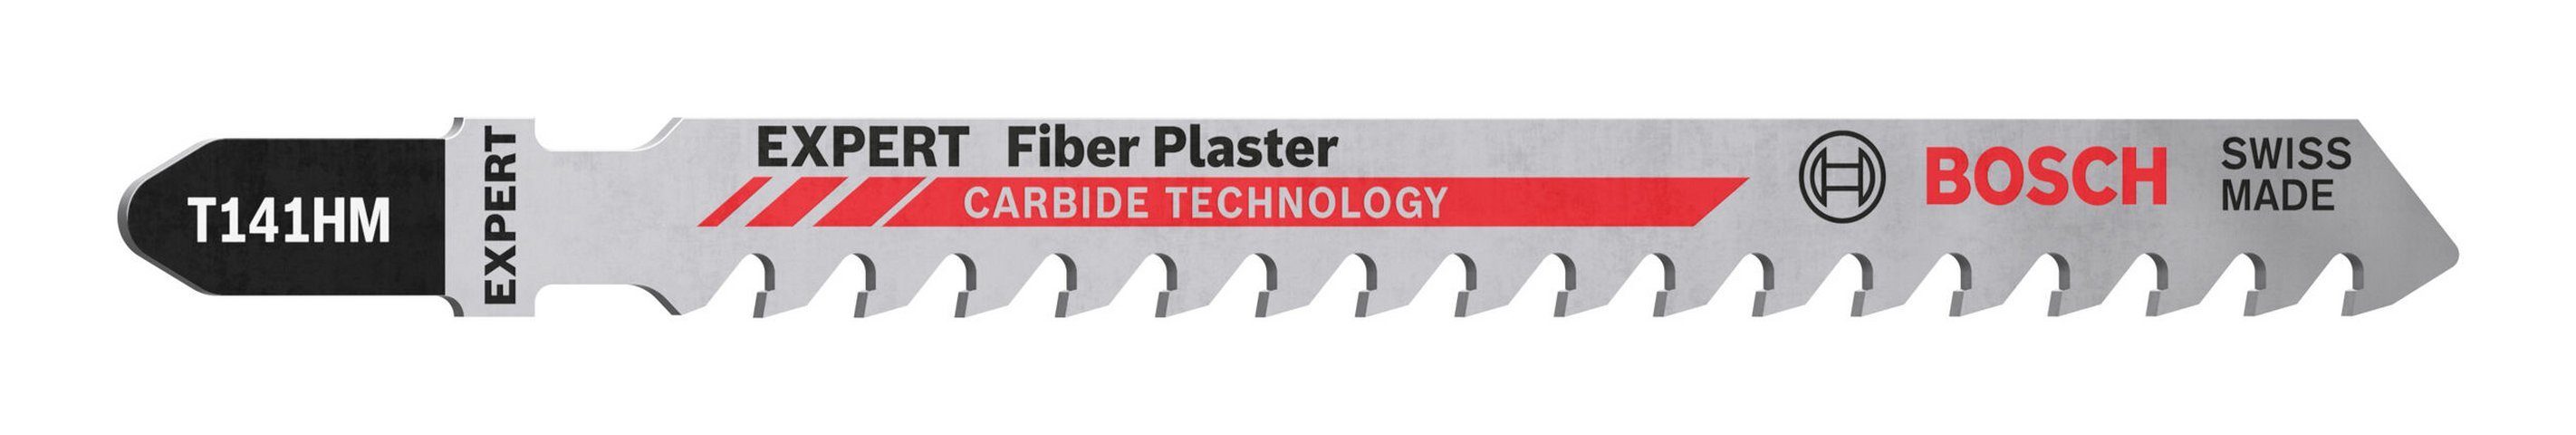 BOSCH Stichsägeblatt Expert Fiber Plaster T141 HM (3 Stück), Stichsägeblatt - 3er-Pack